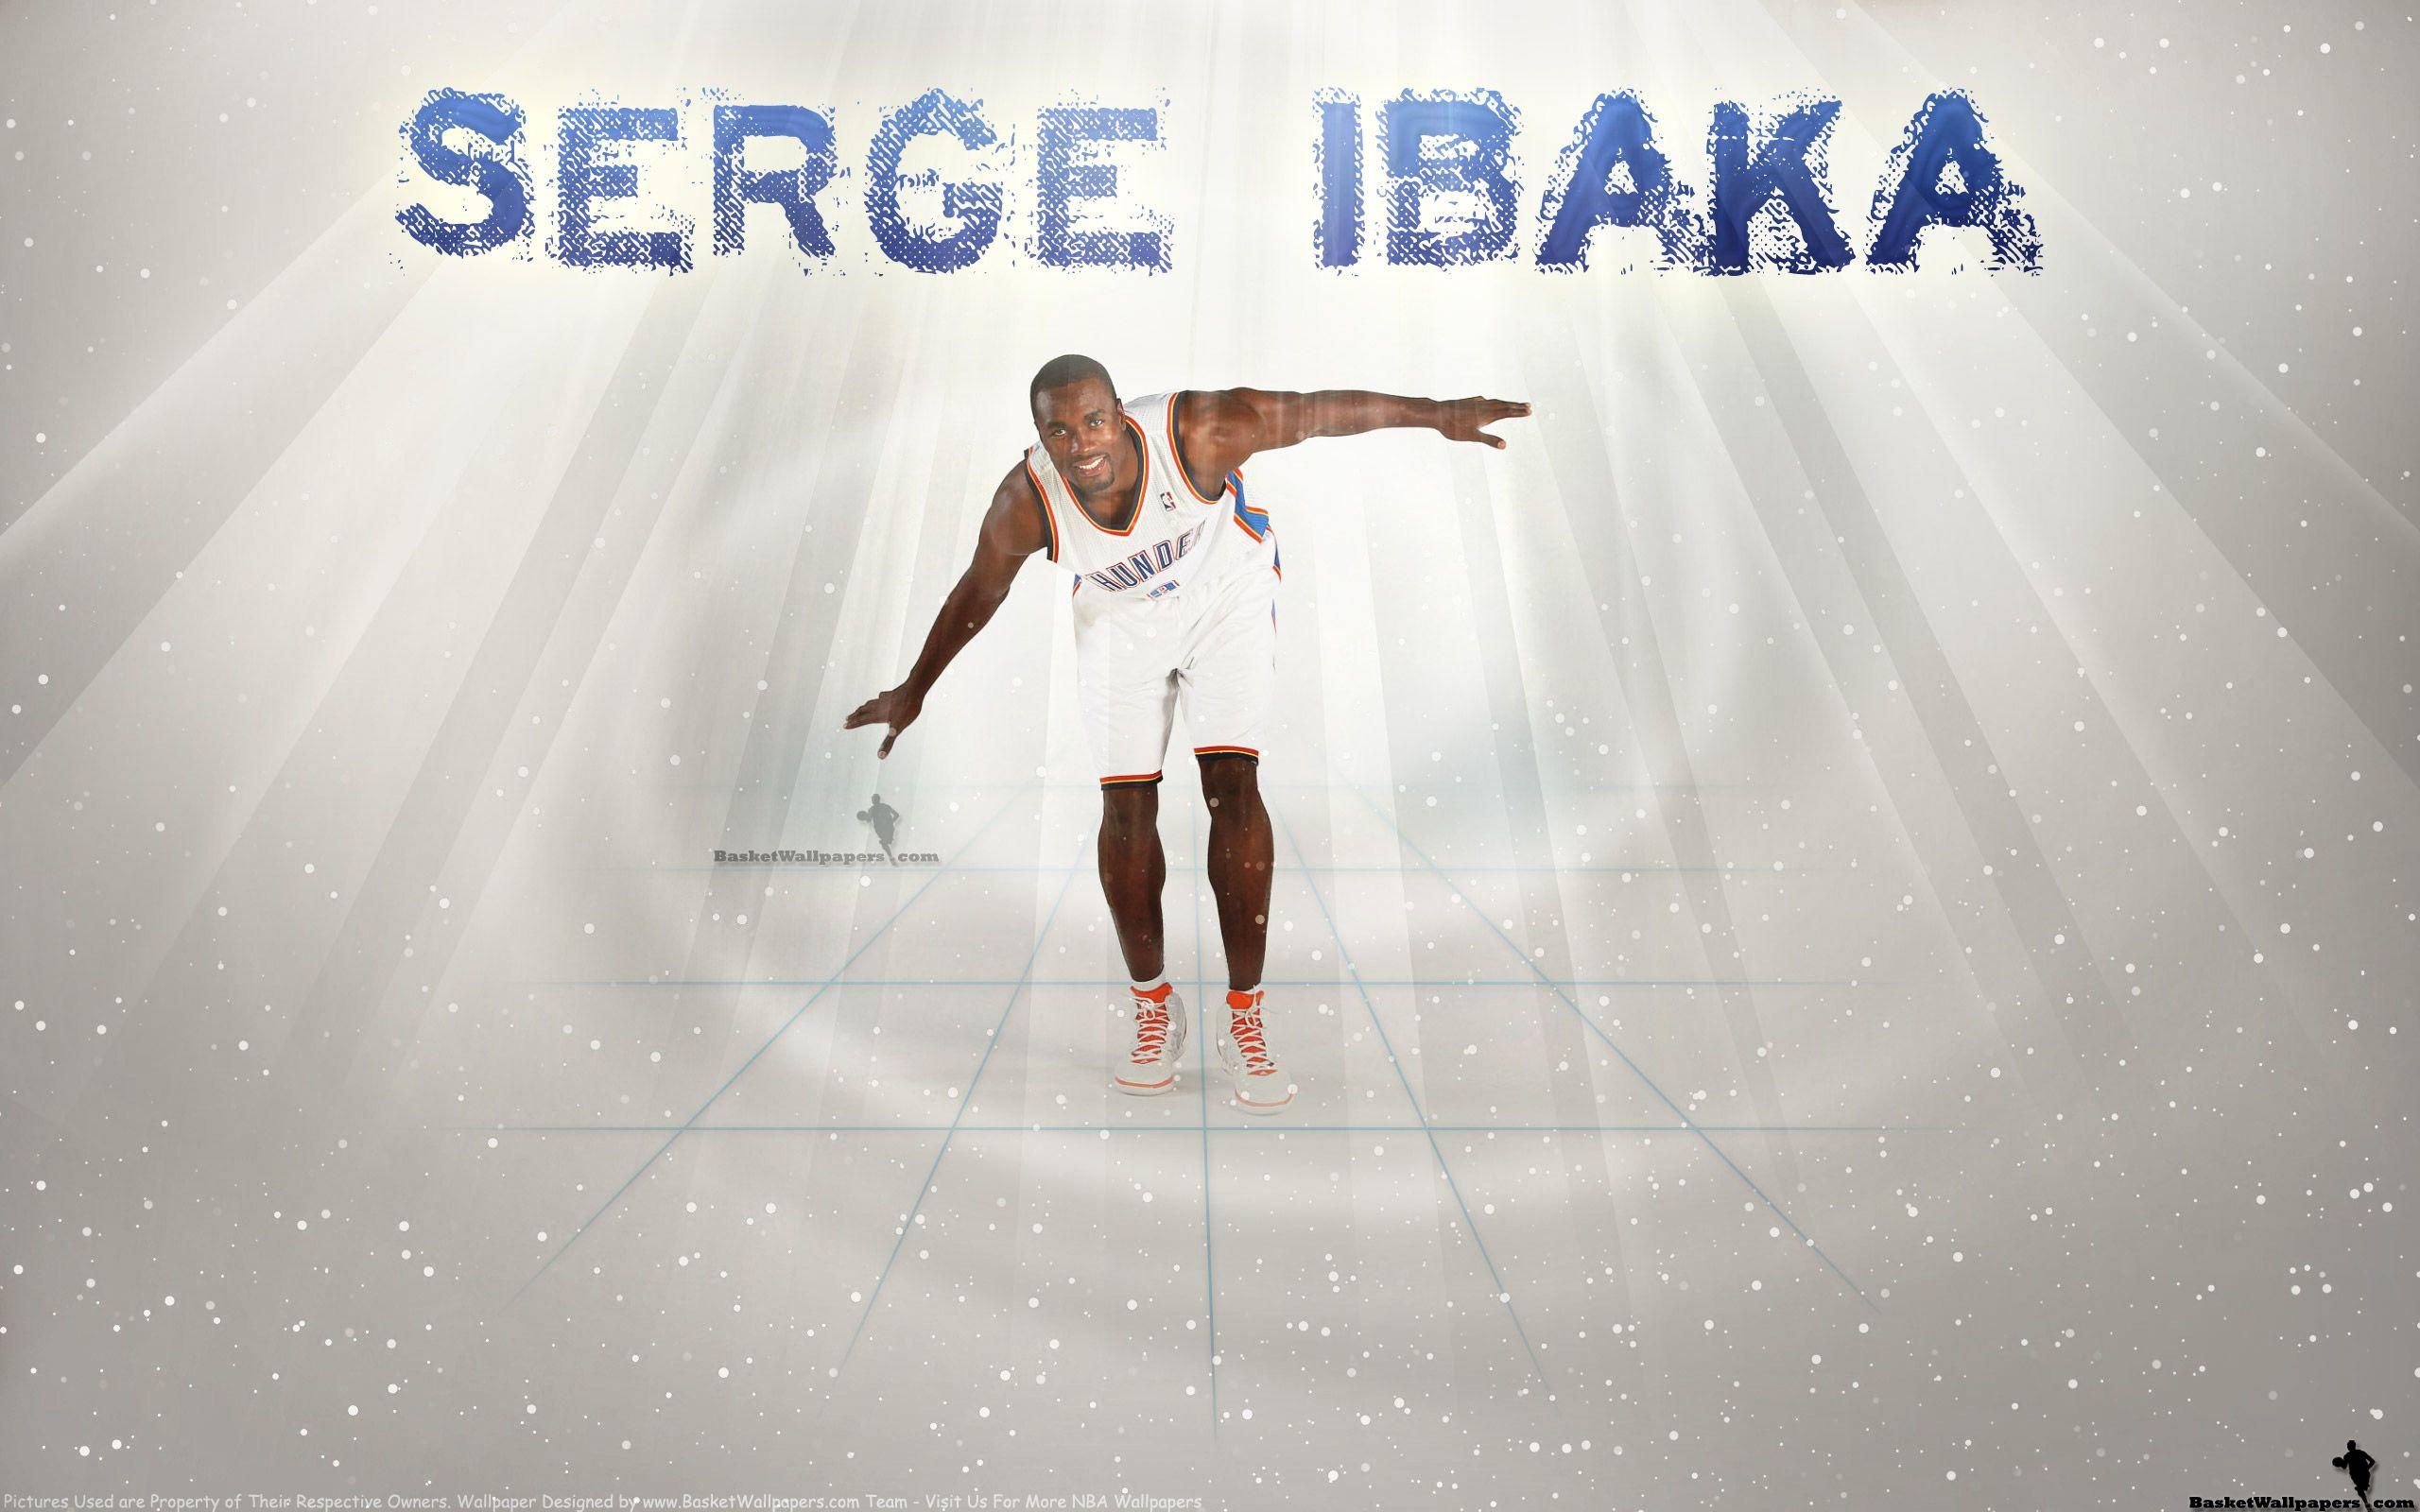 Serge Ibaka Wallpaper. Basketball Wallpaper at BasketWallpaper